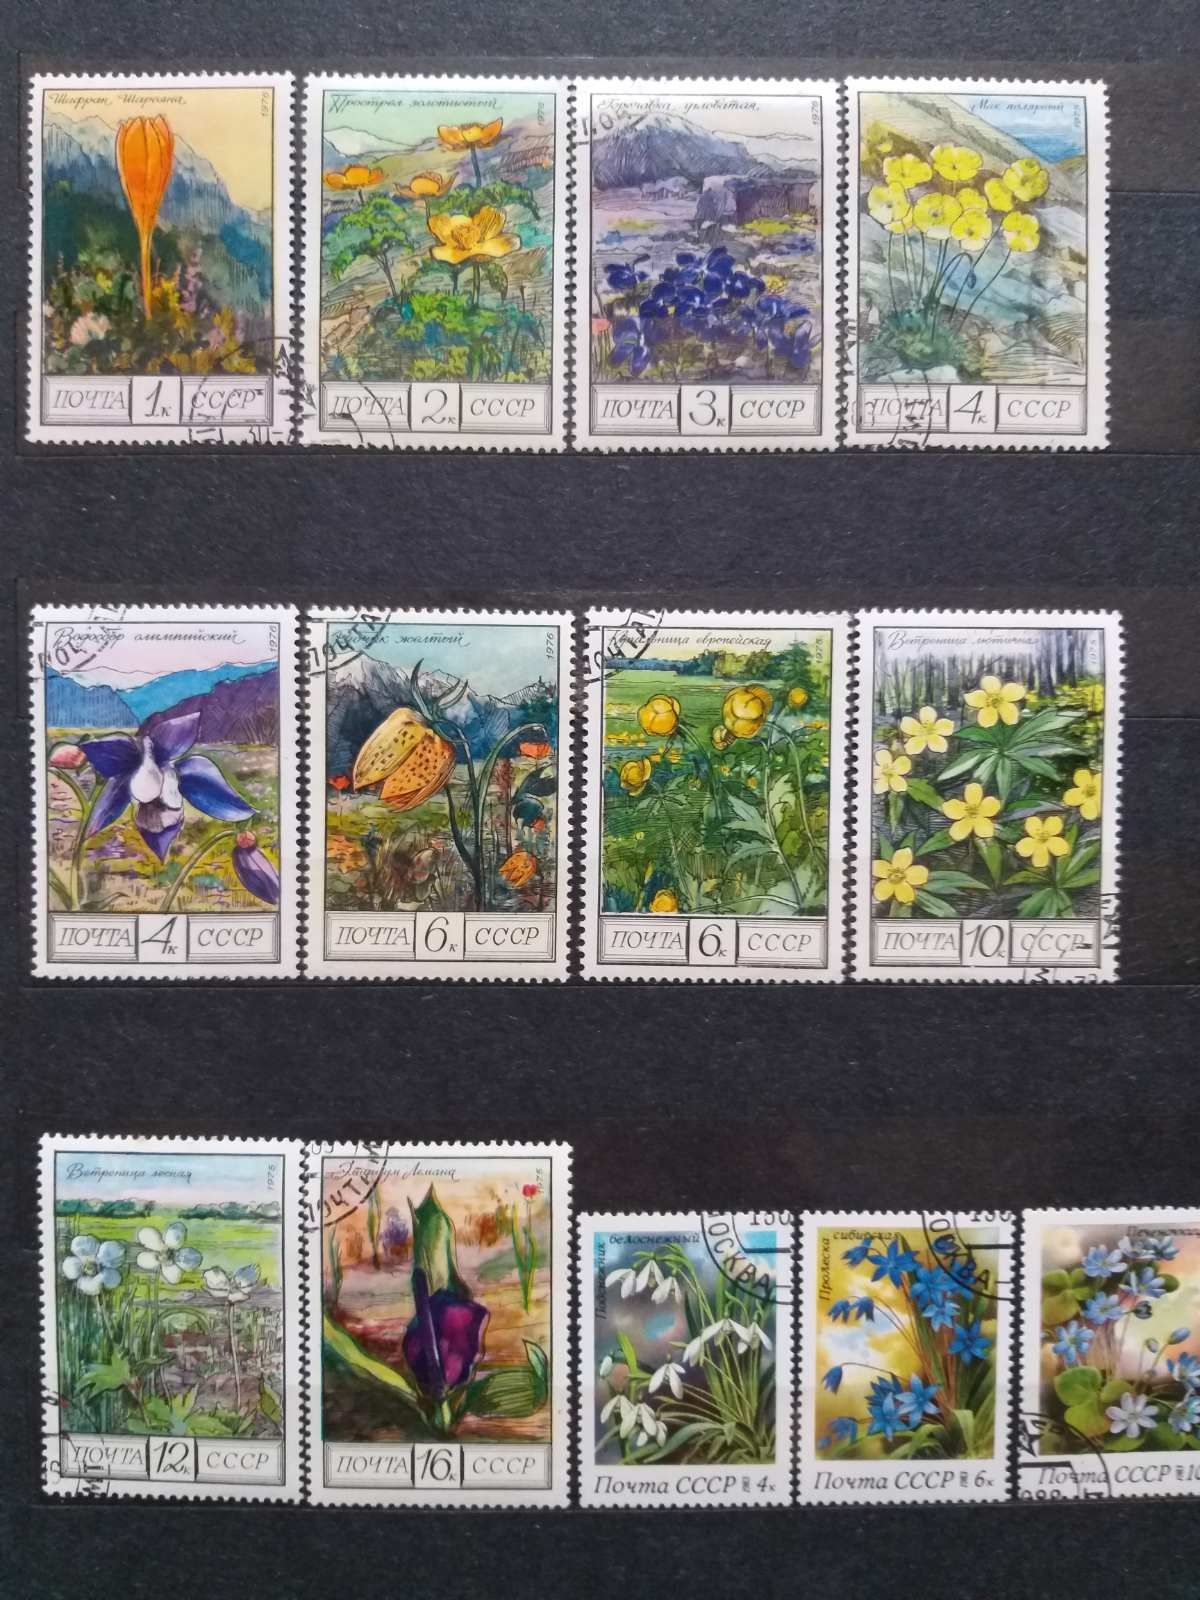 Почтовые марки на тему "Флора". 5 фото.